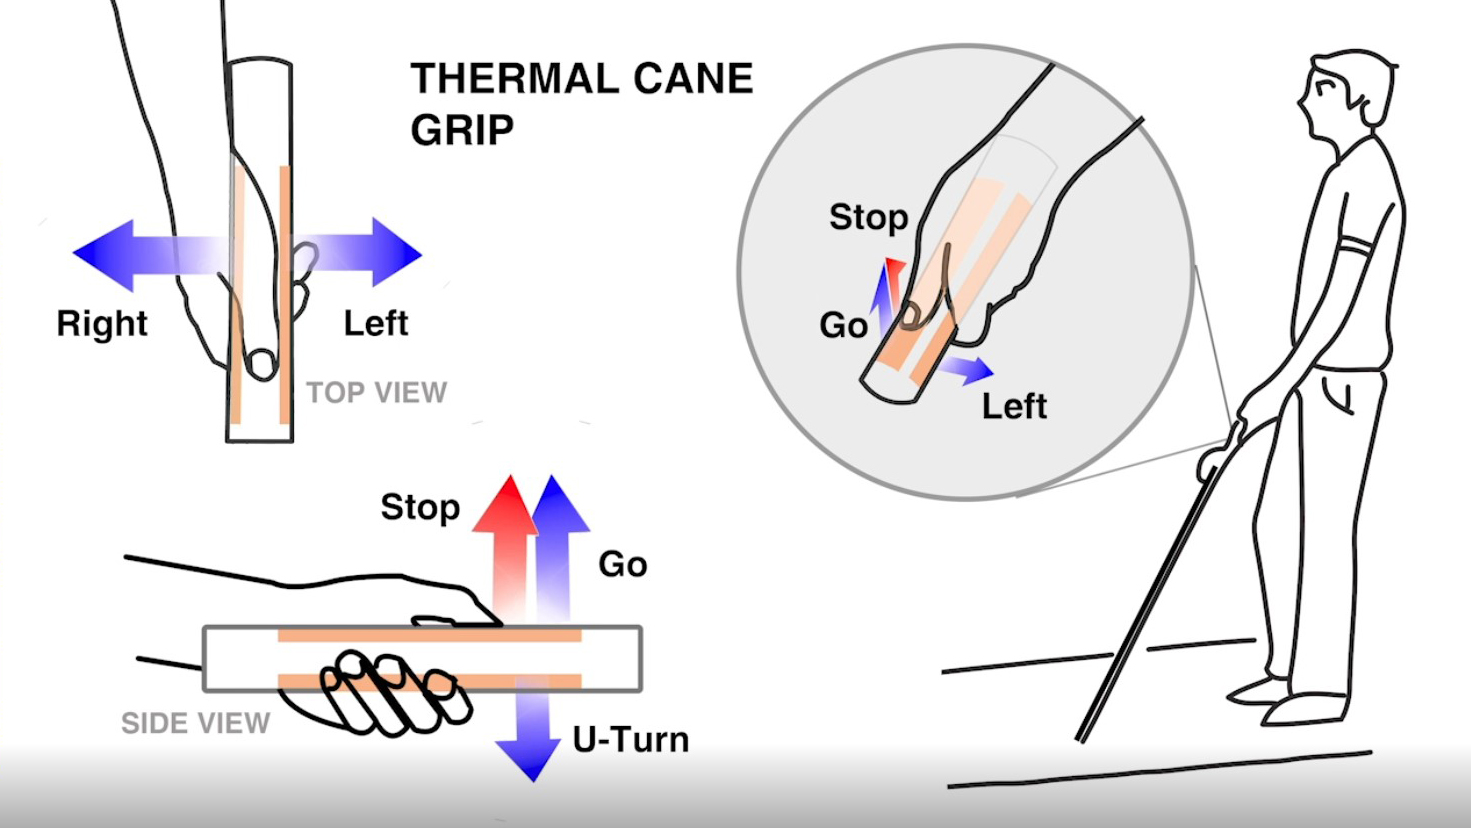 Electronic cane grip 